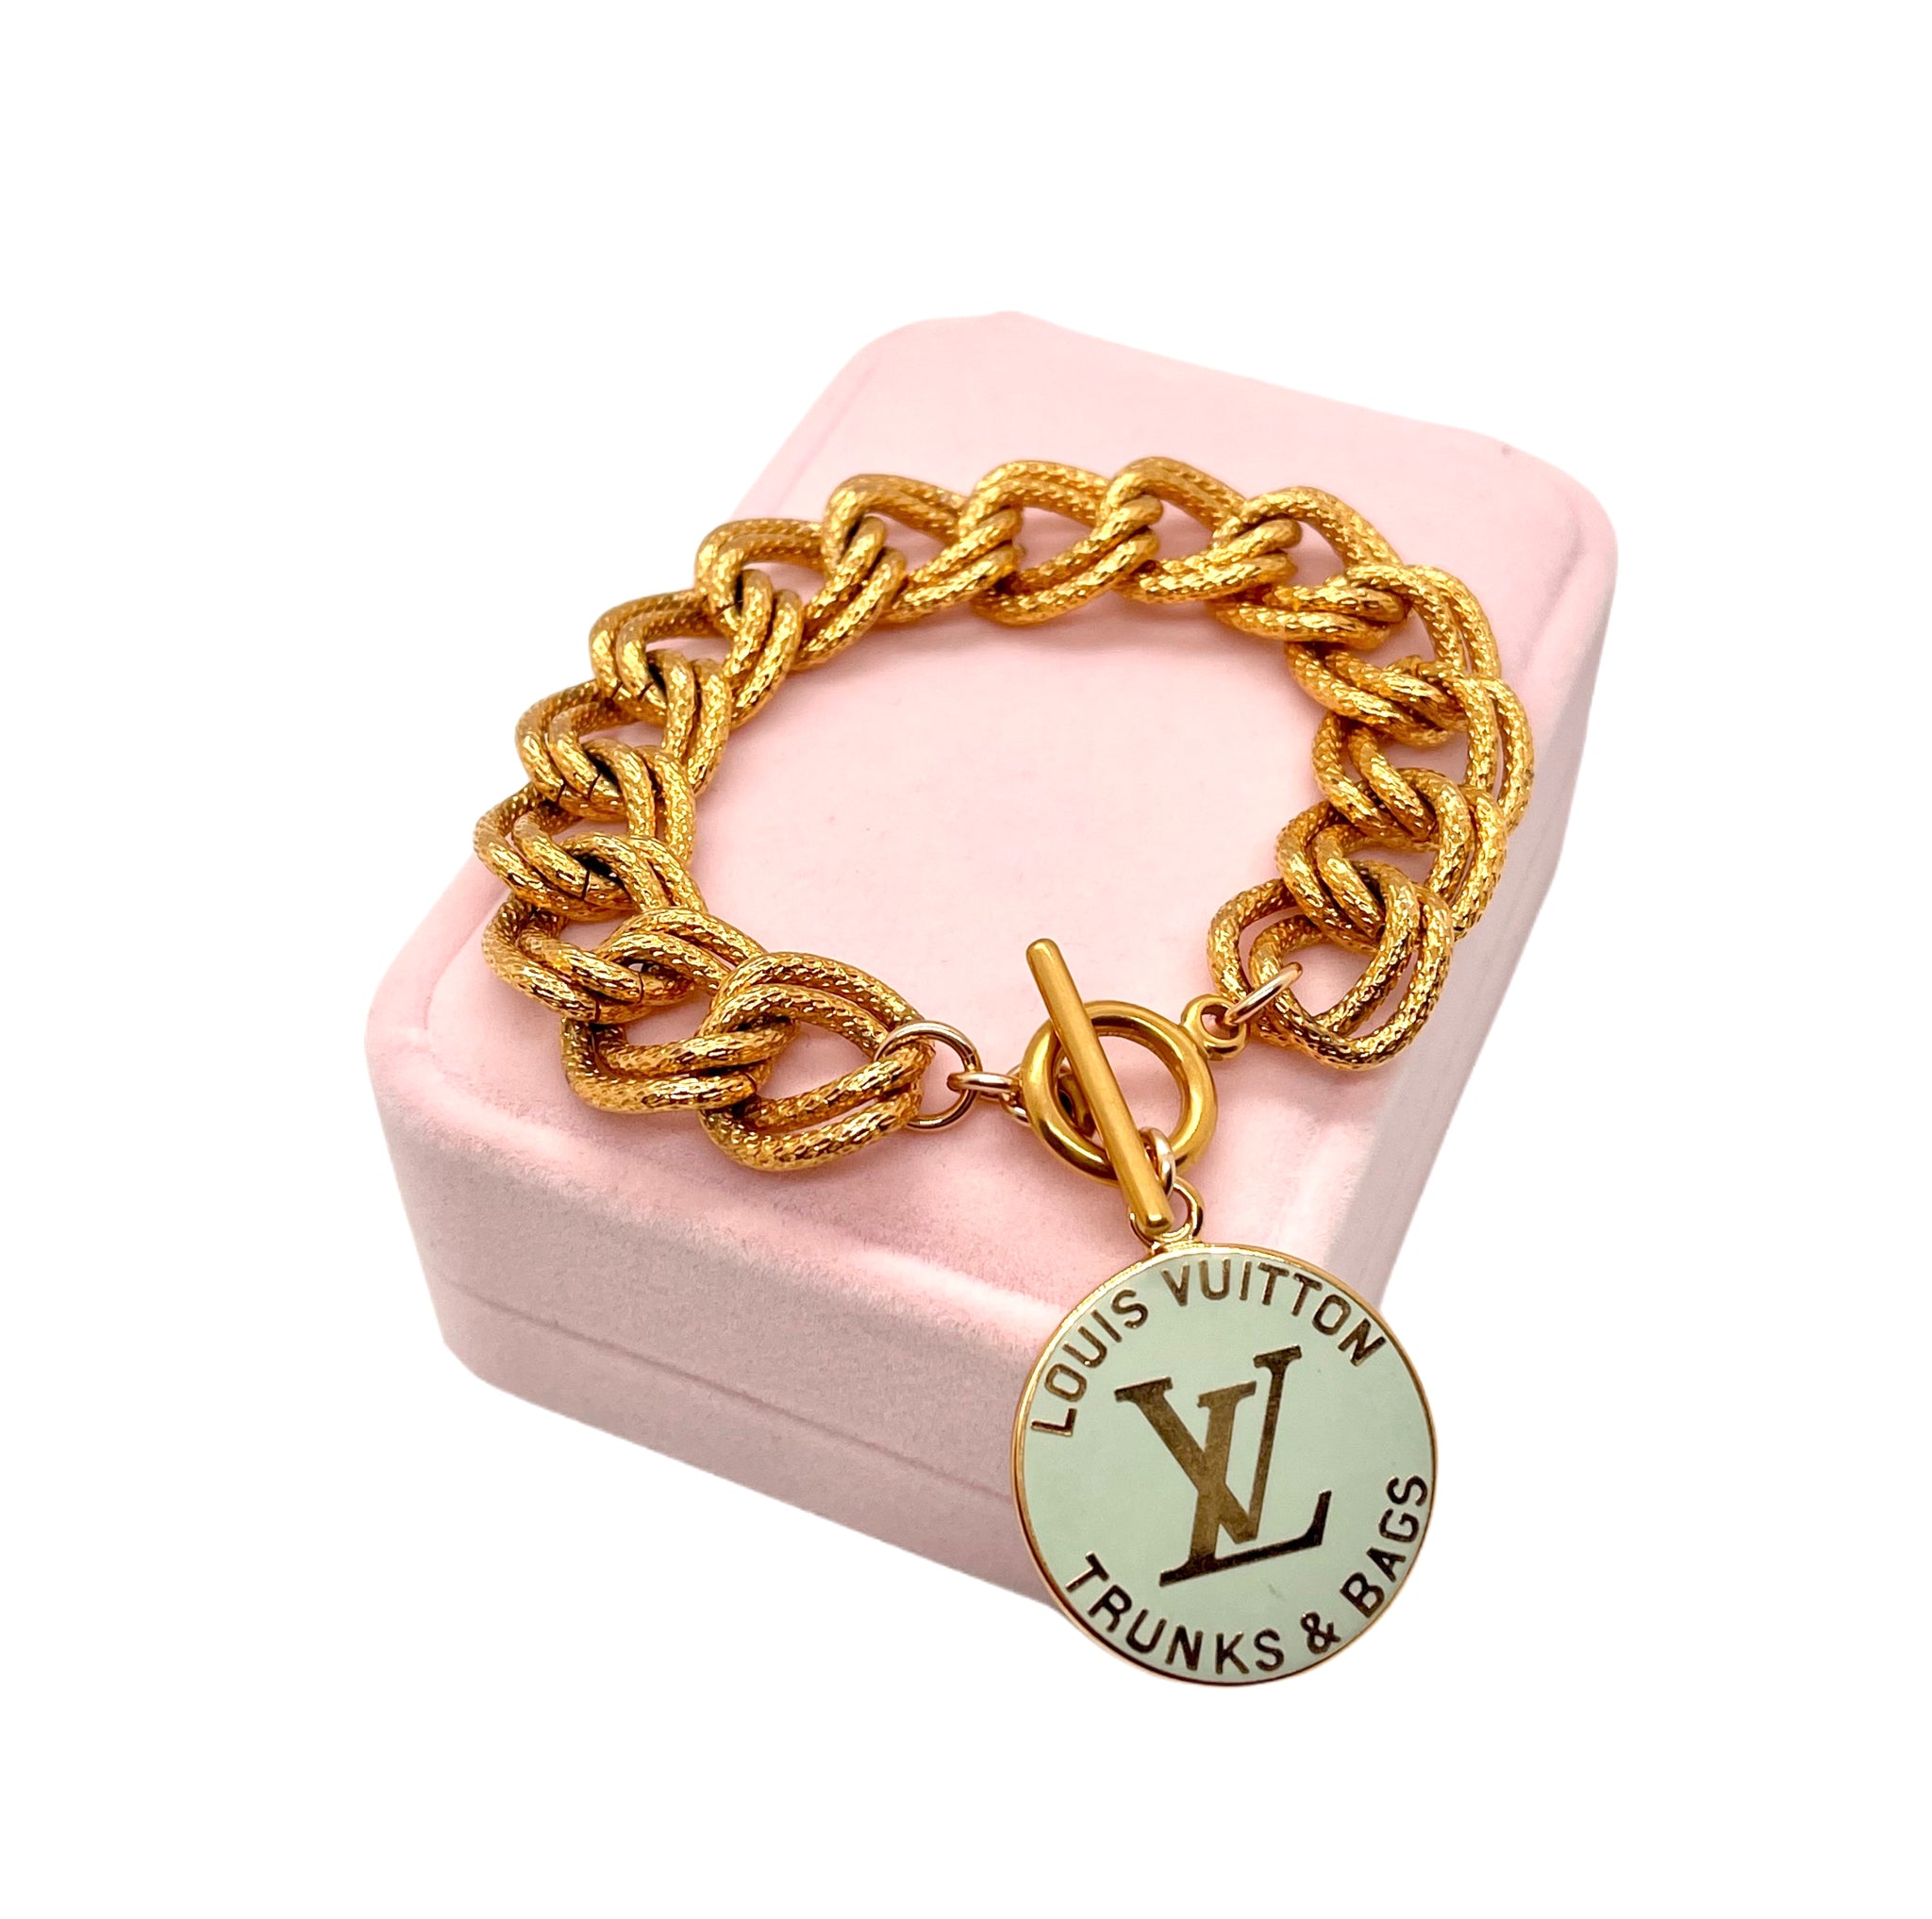 Louis Vuitton Leather Gold Trunk Cuff Bracelet